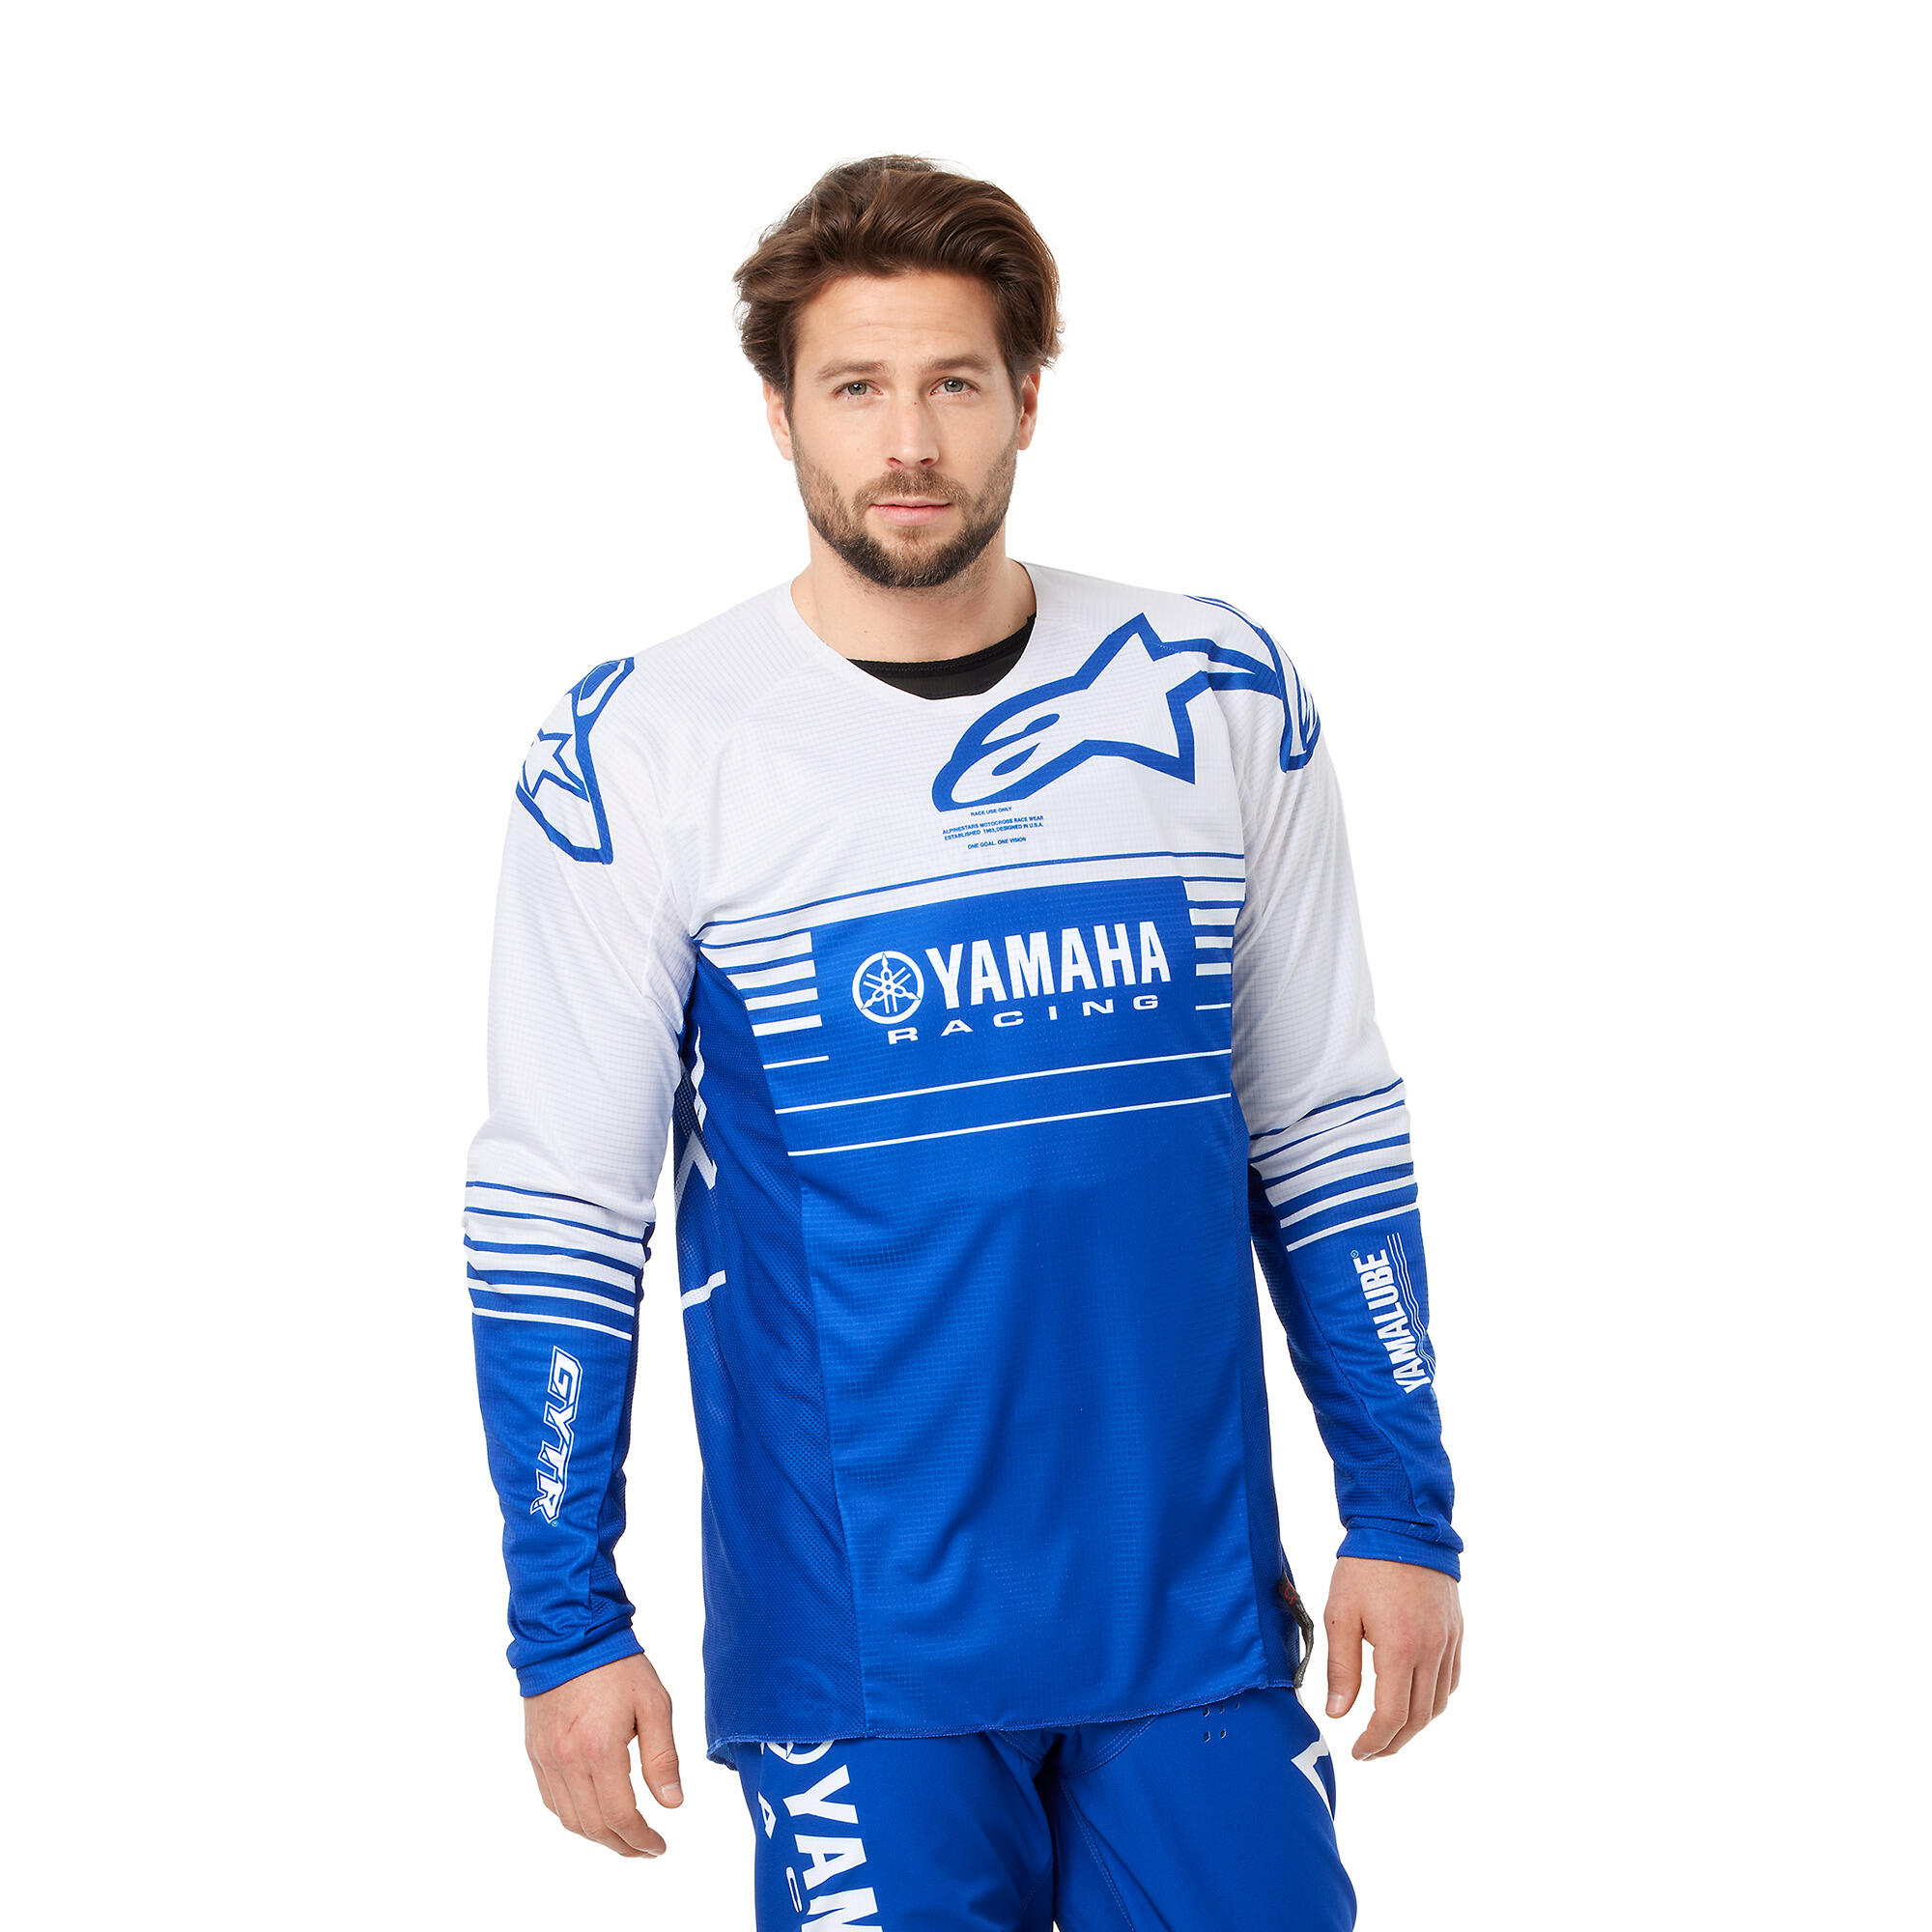 Camiseta MX de Yamaha Alpinestars para hombre - A22-RT113-E8-0L - Yamaha Motor